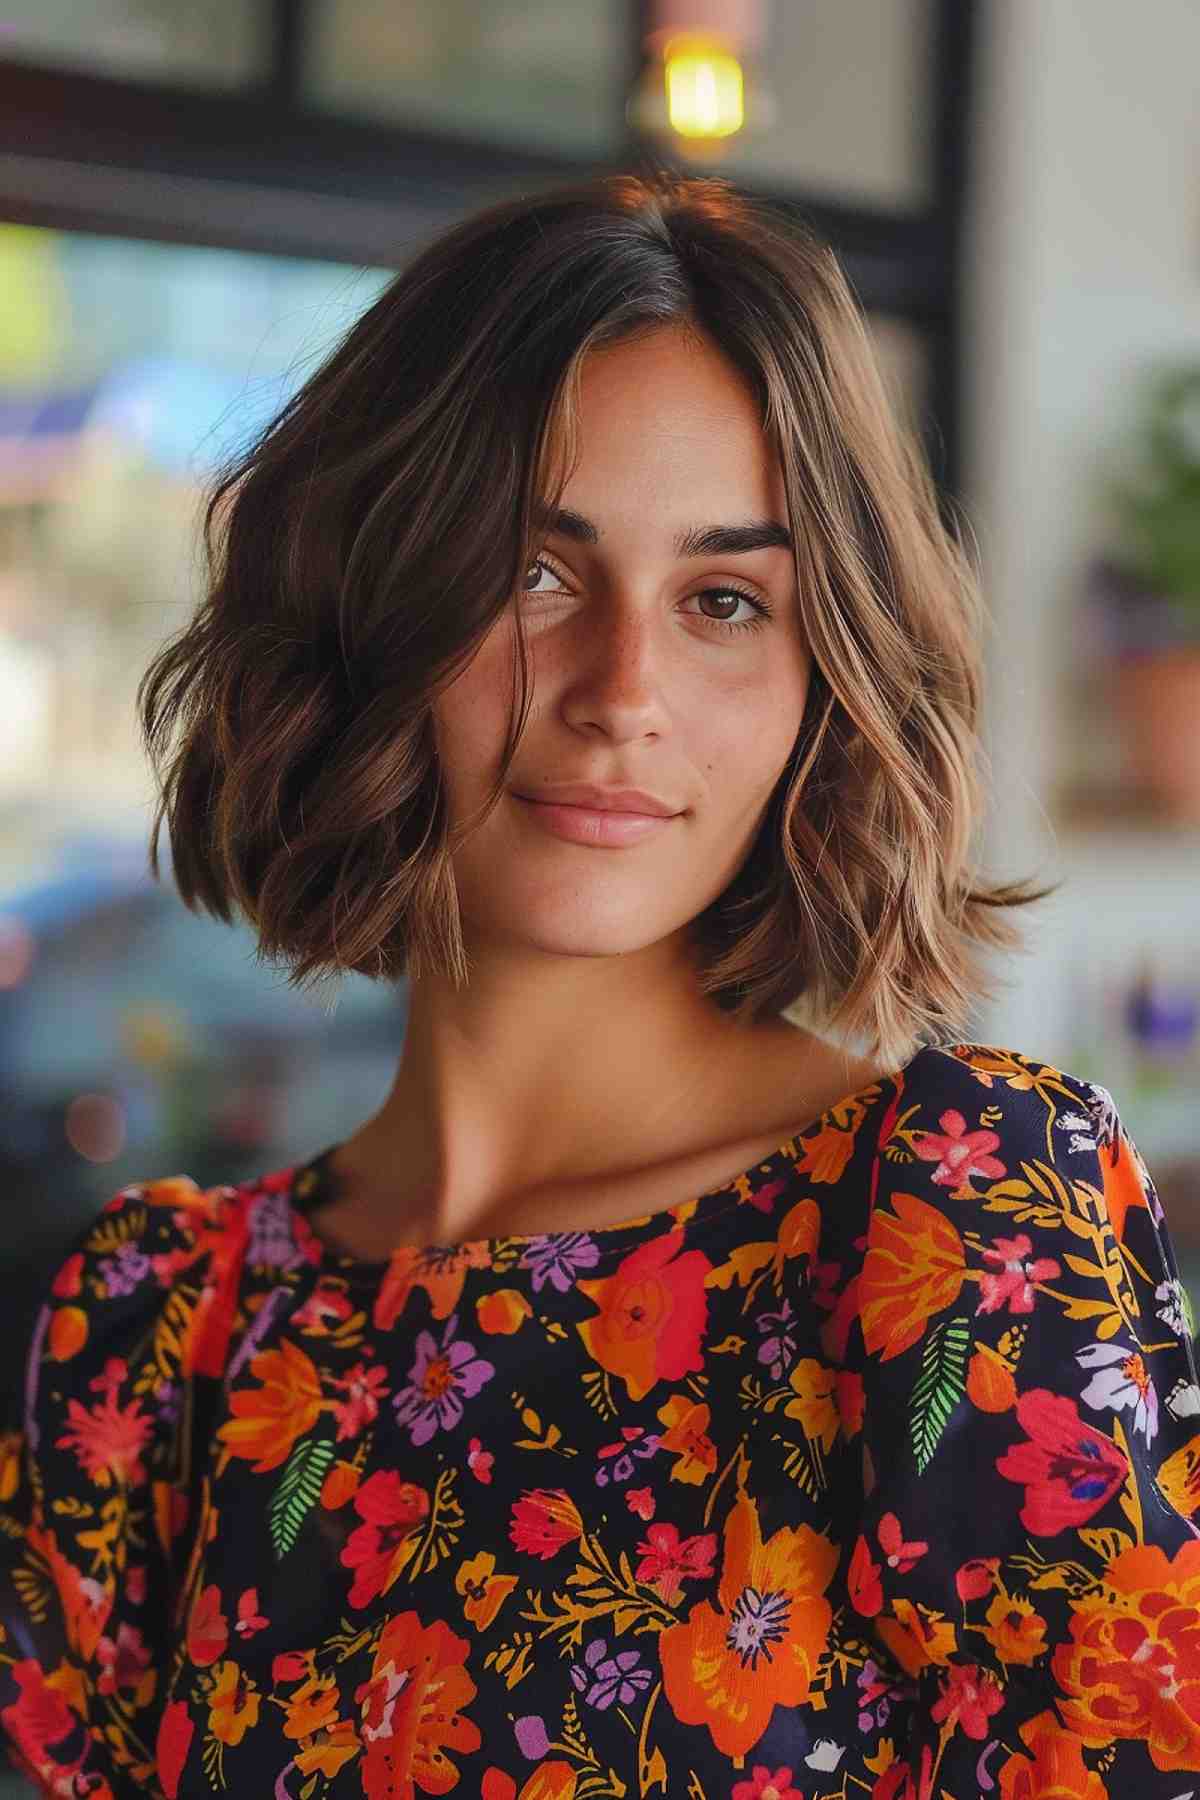 Young woman with balayage wavy chin-length layered haircut wearing floral top